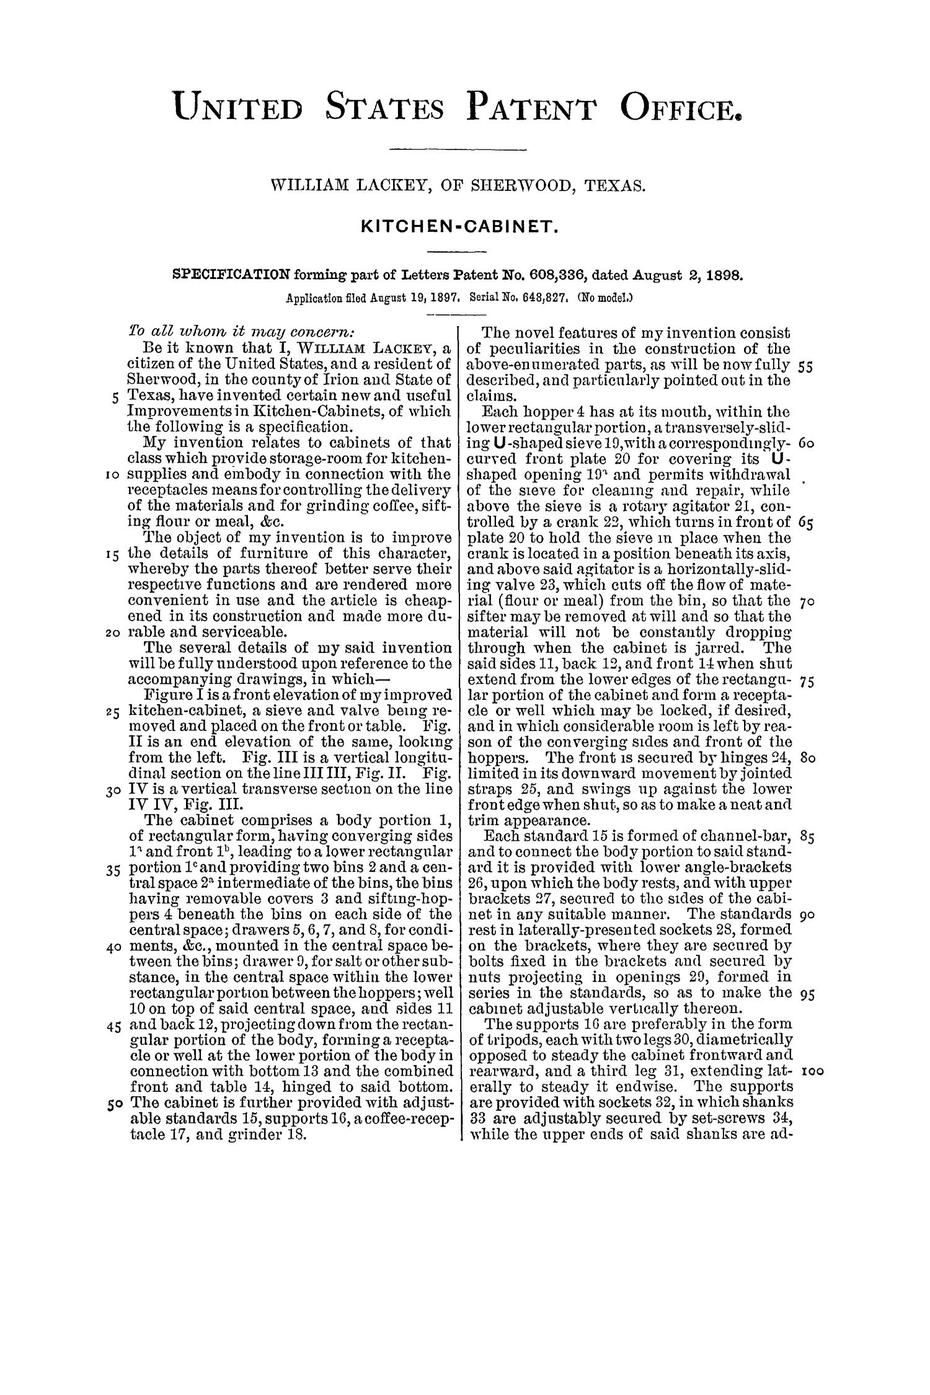 William Lackey - Kitchen Cabinet Patent pg 1